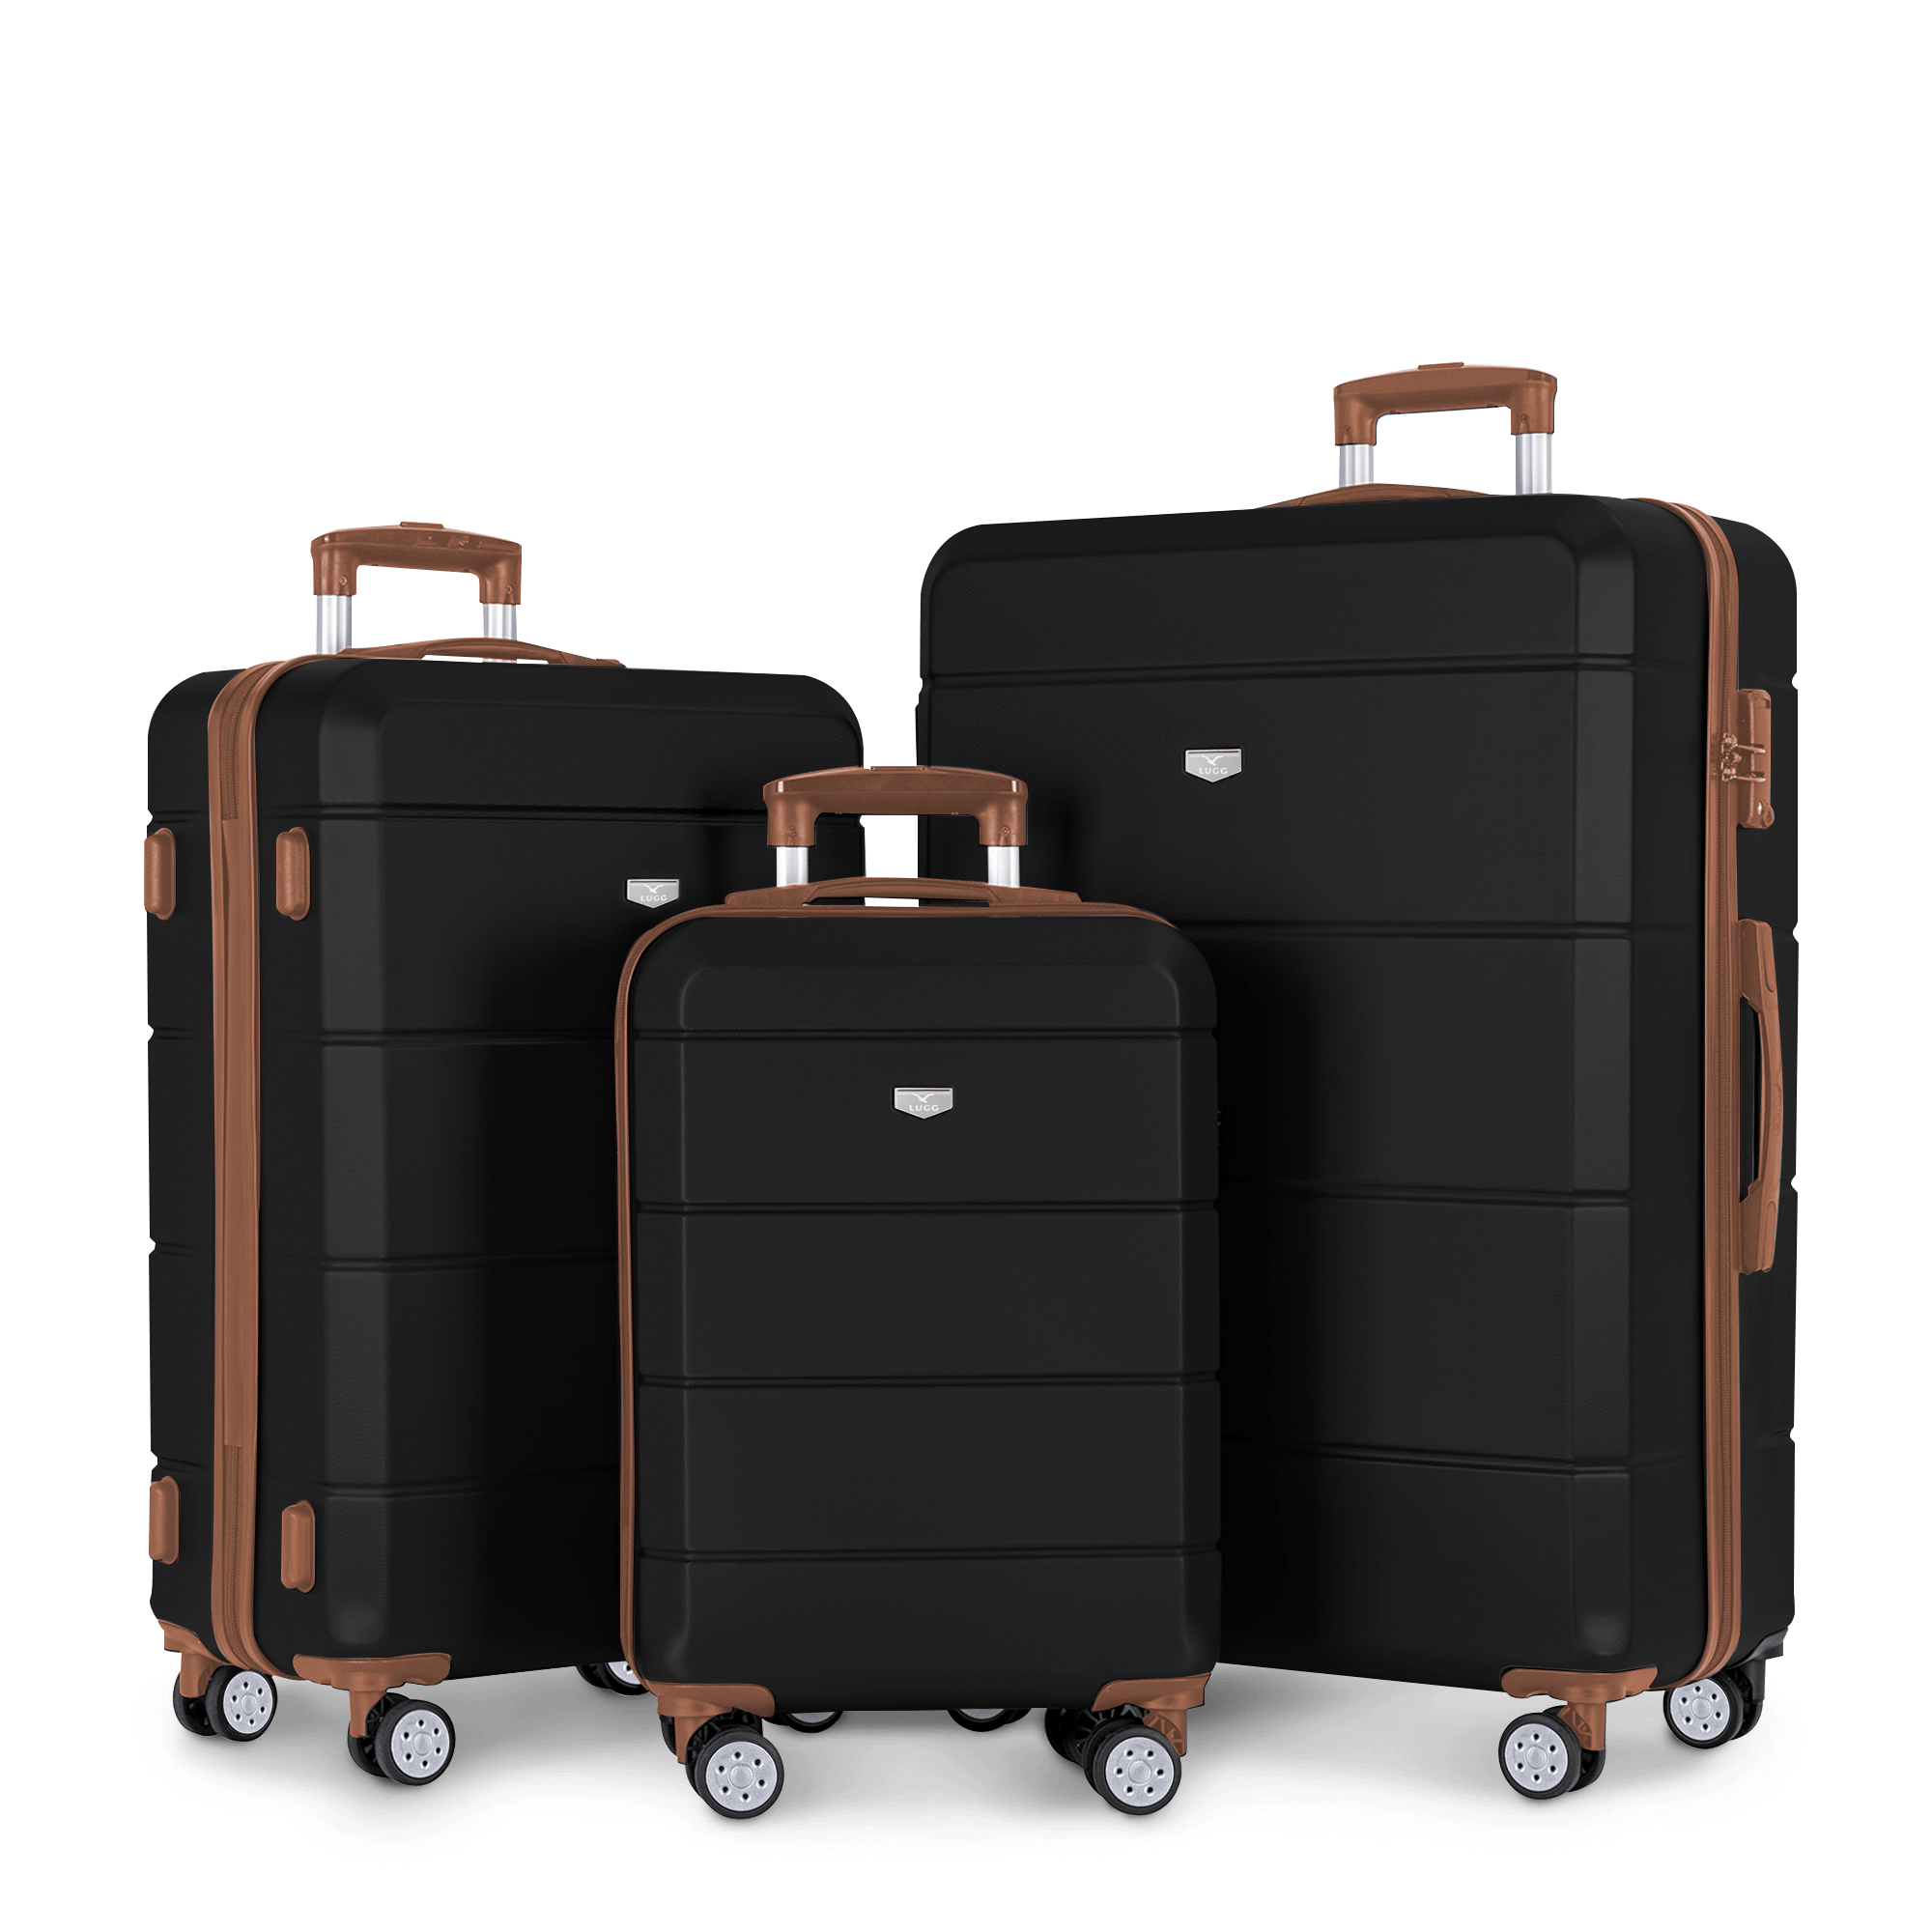 Jetset 3pc Suitcase Set in Black & Brown